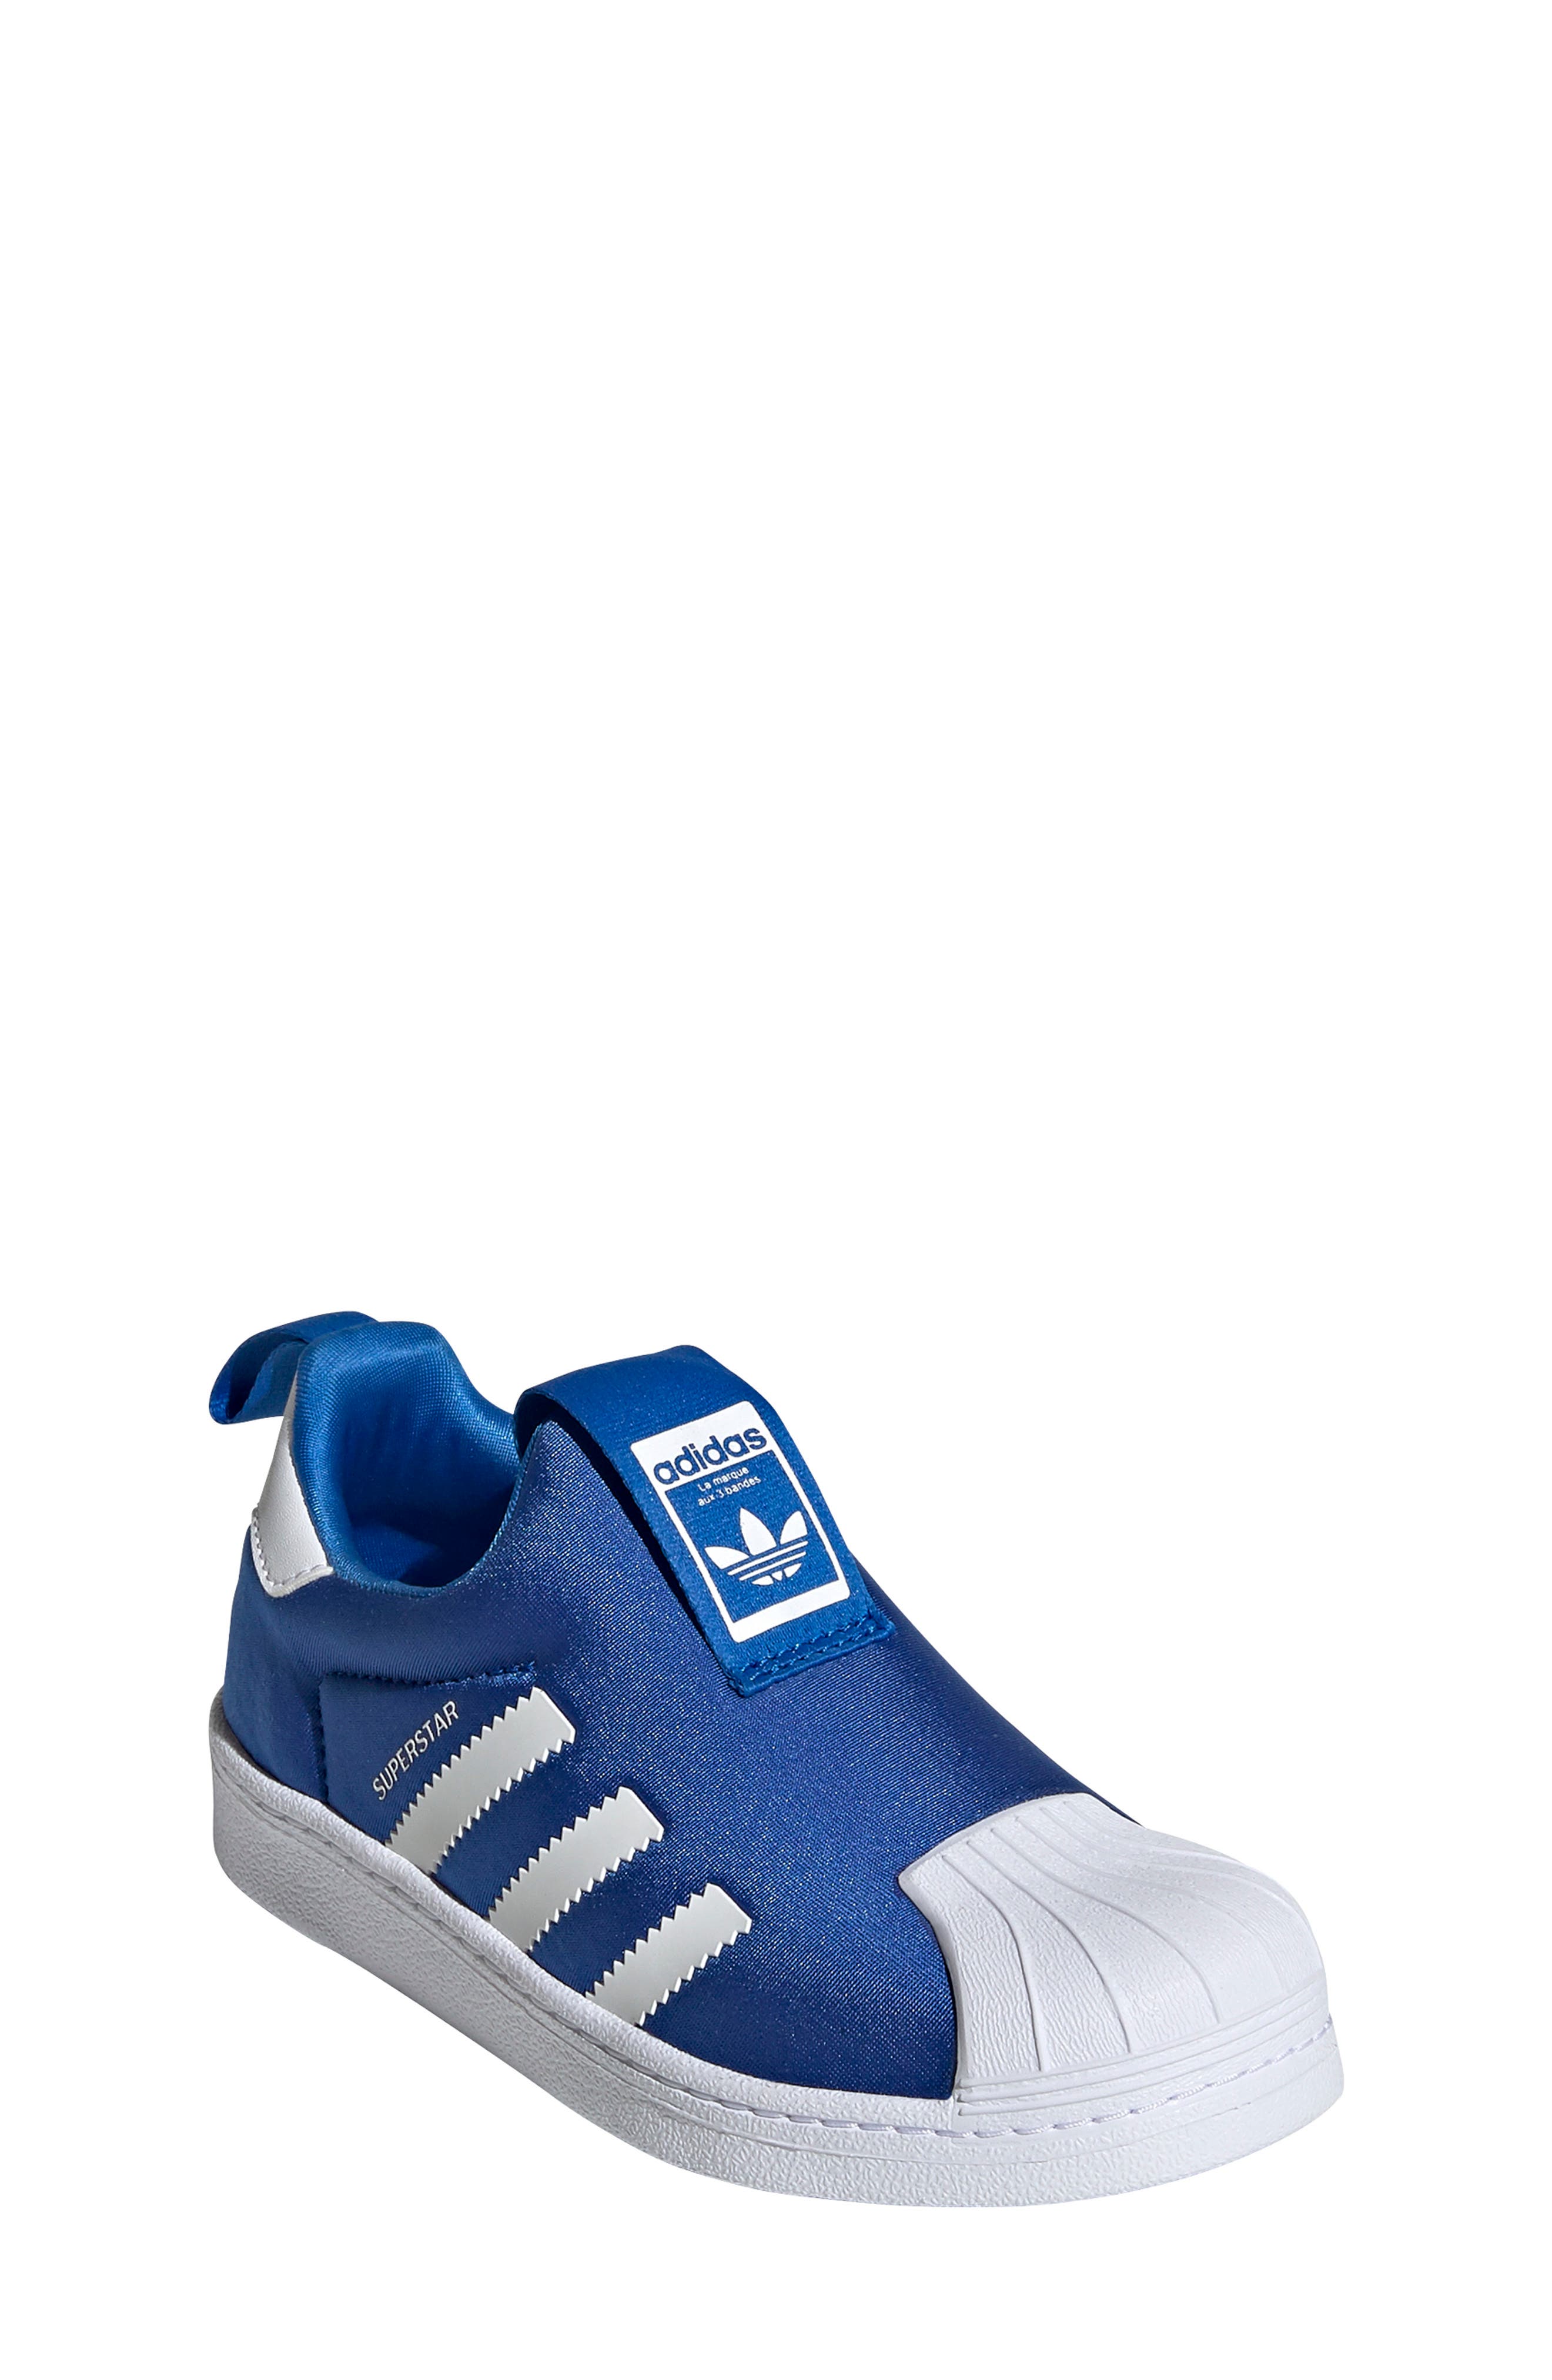 boys adidas shoes blue